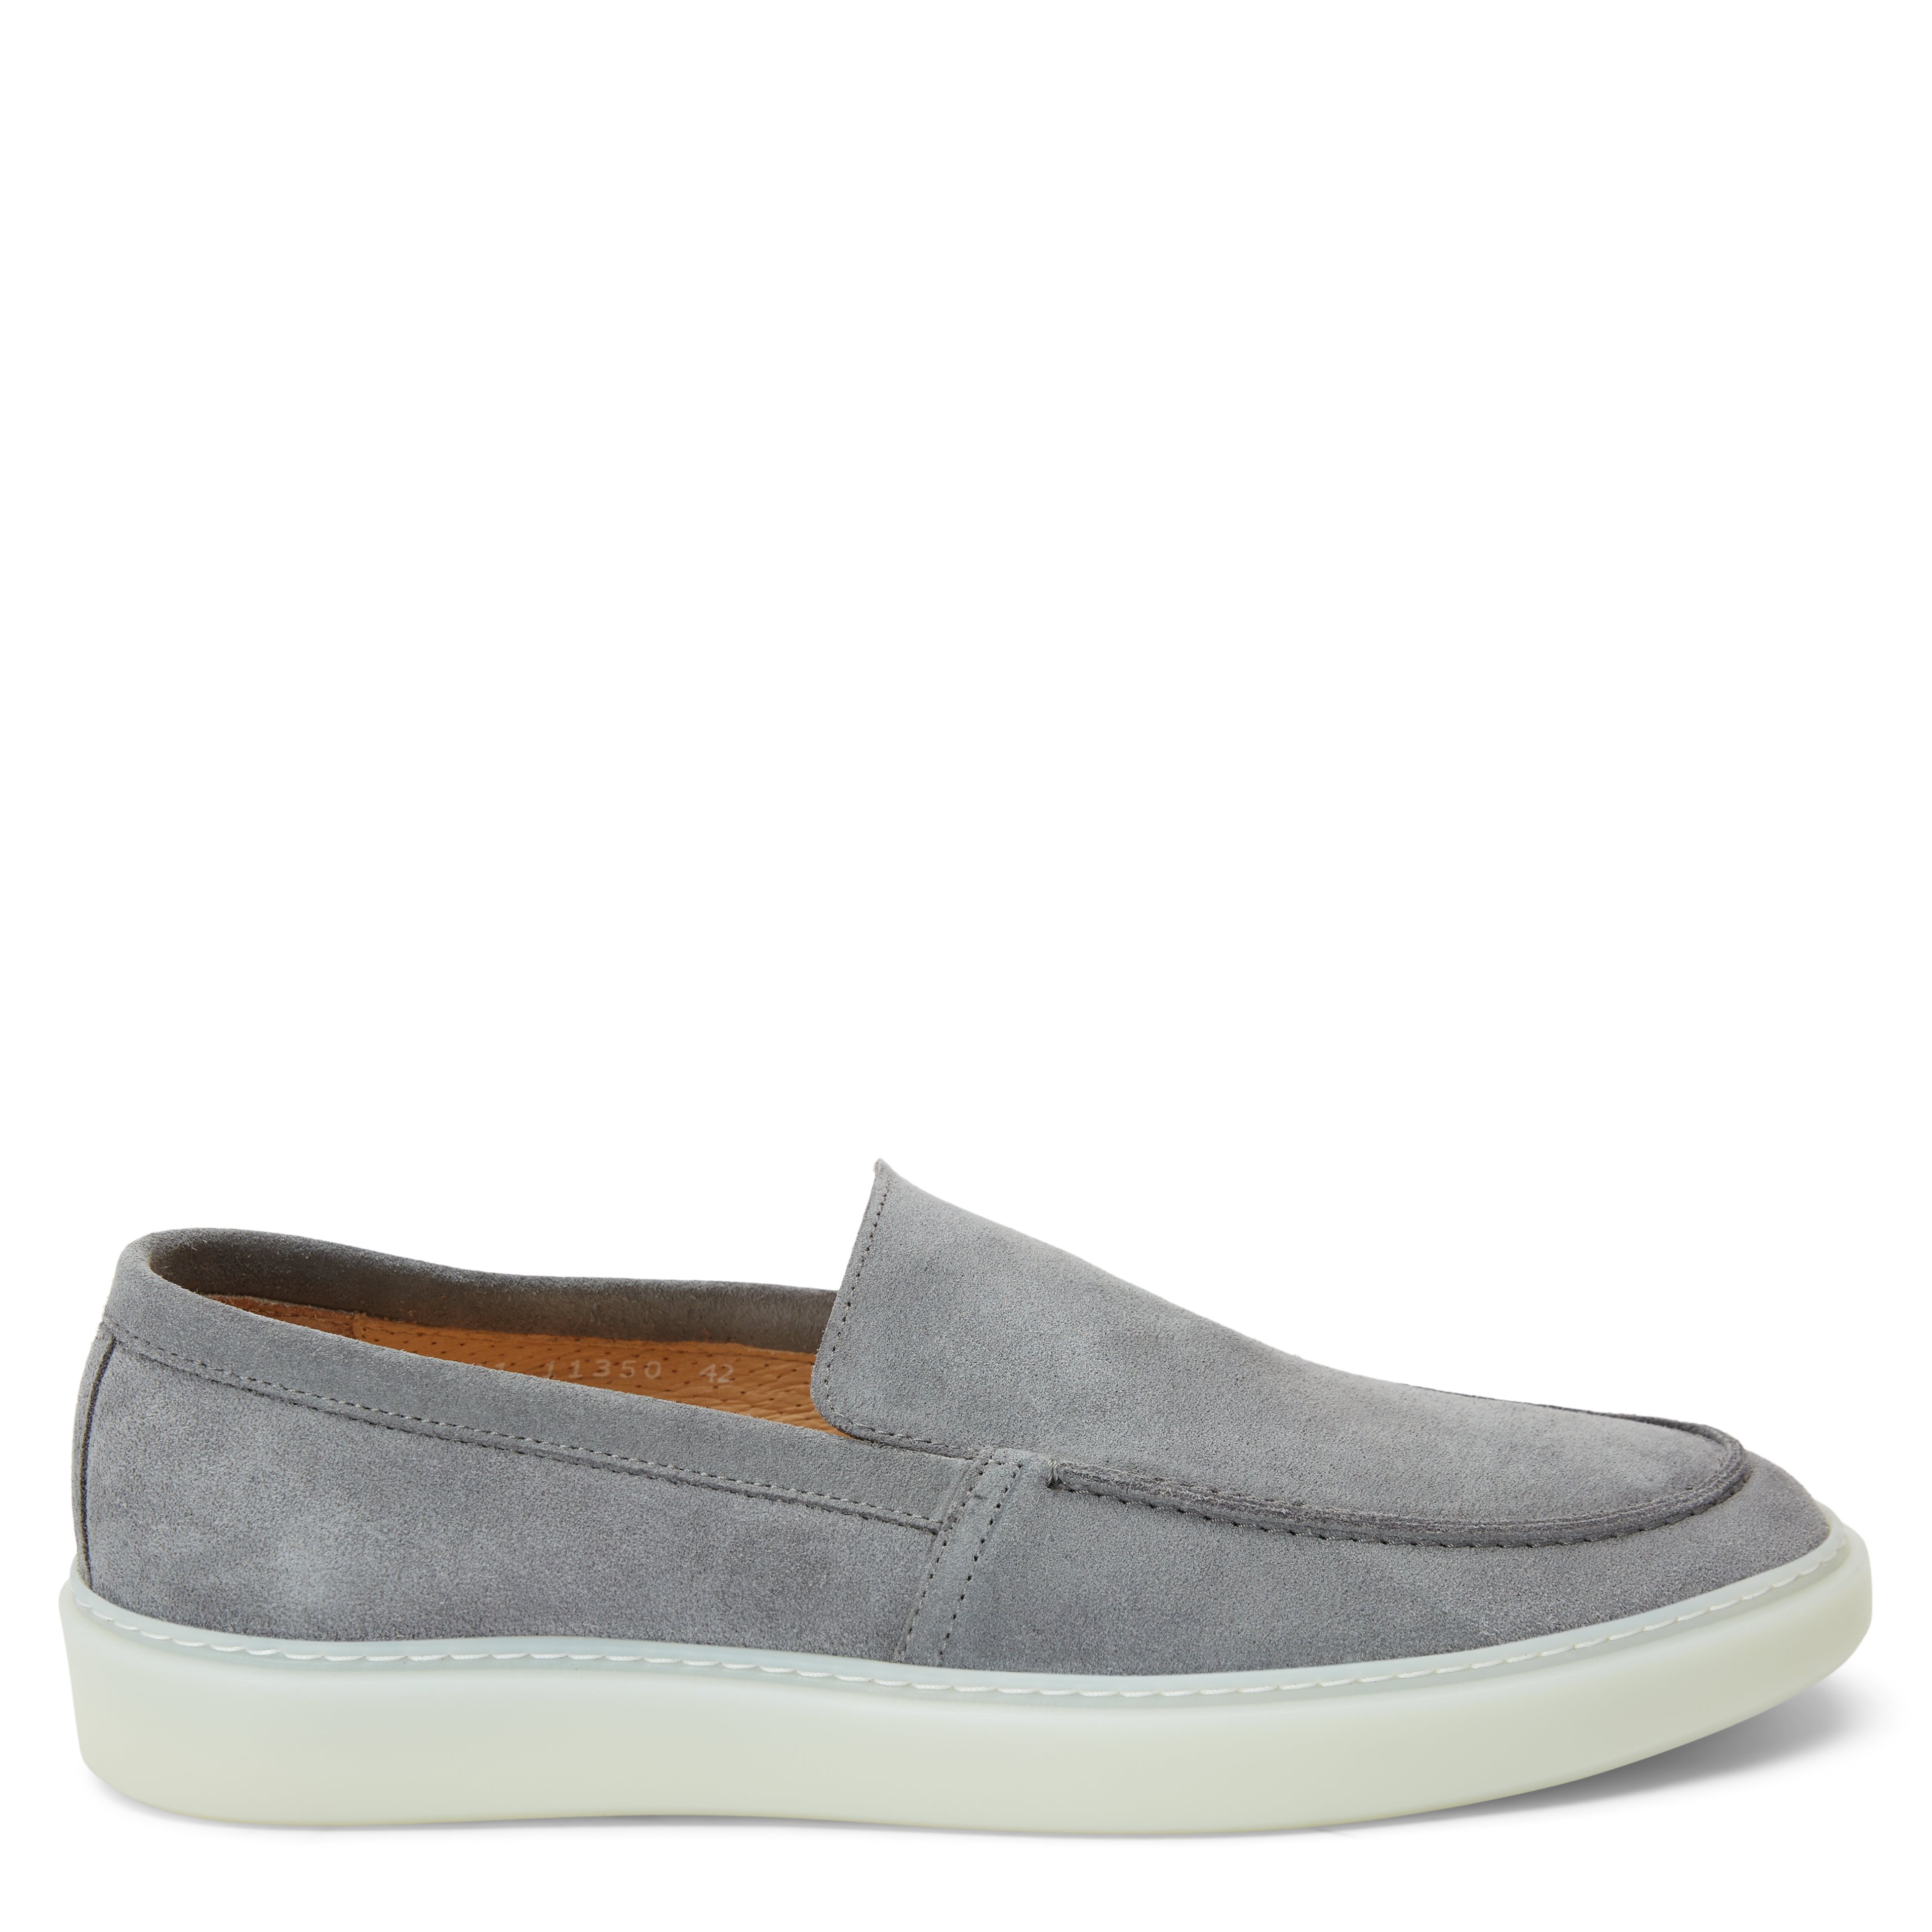 Ahler Shoes A41 11350 Grey